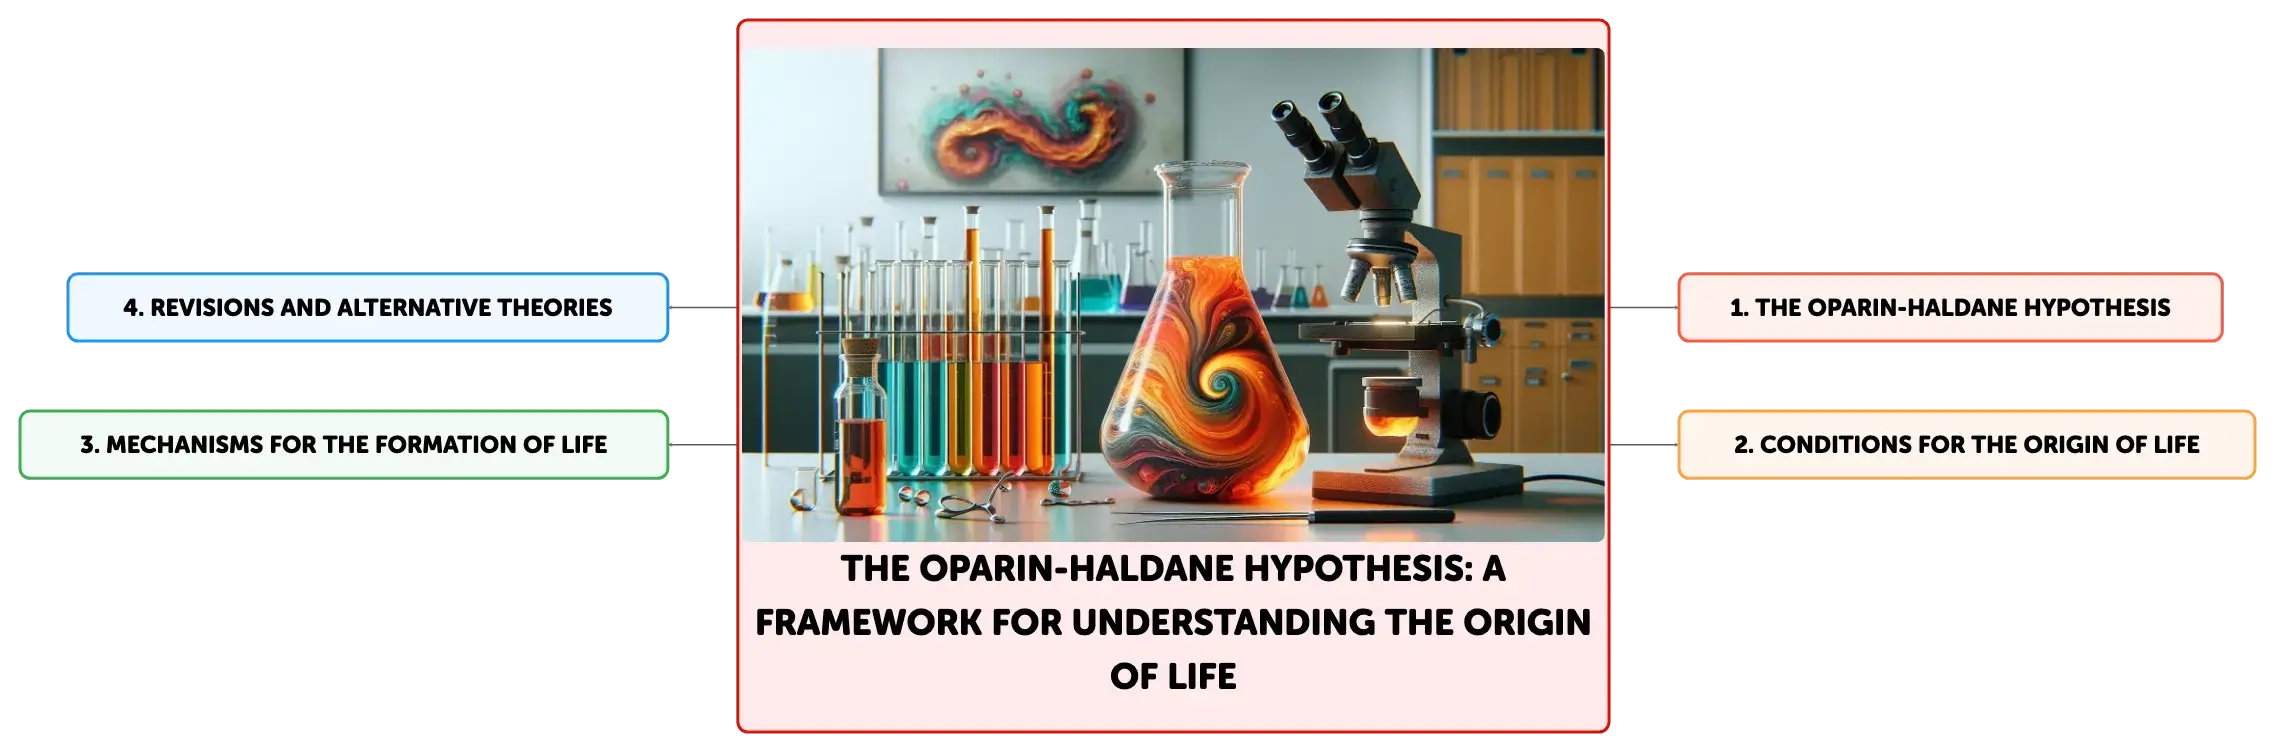 state oparin and haldane hypothesis